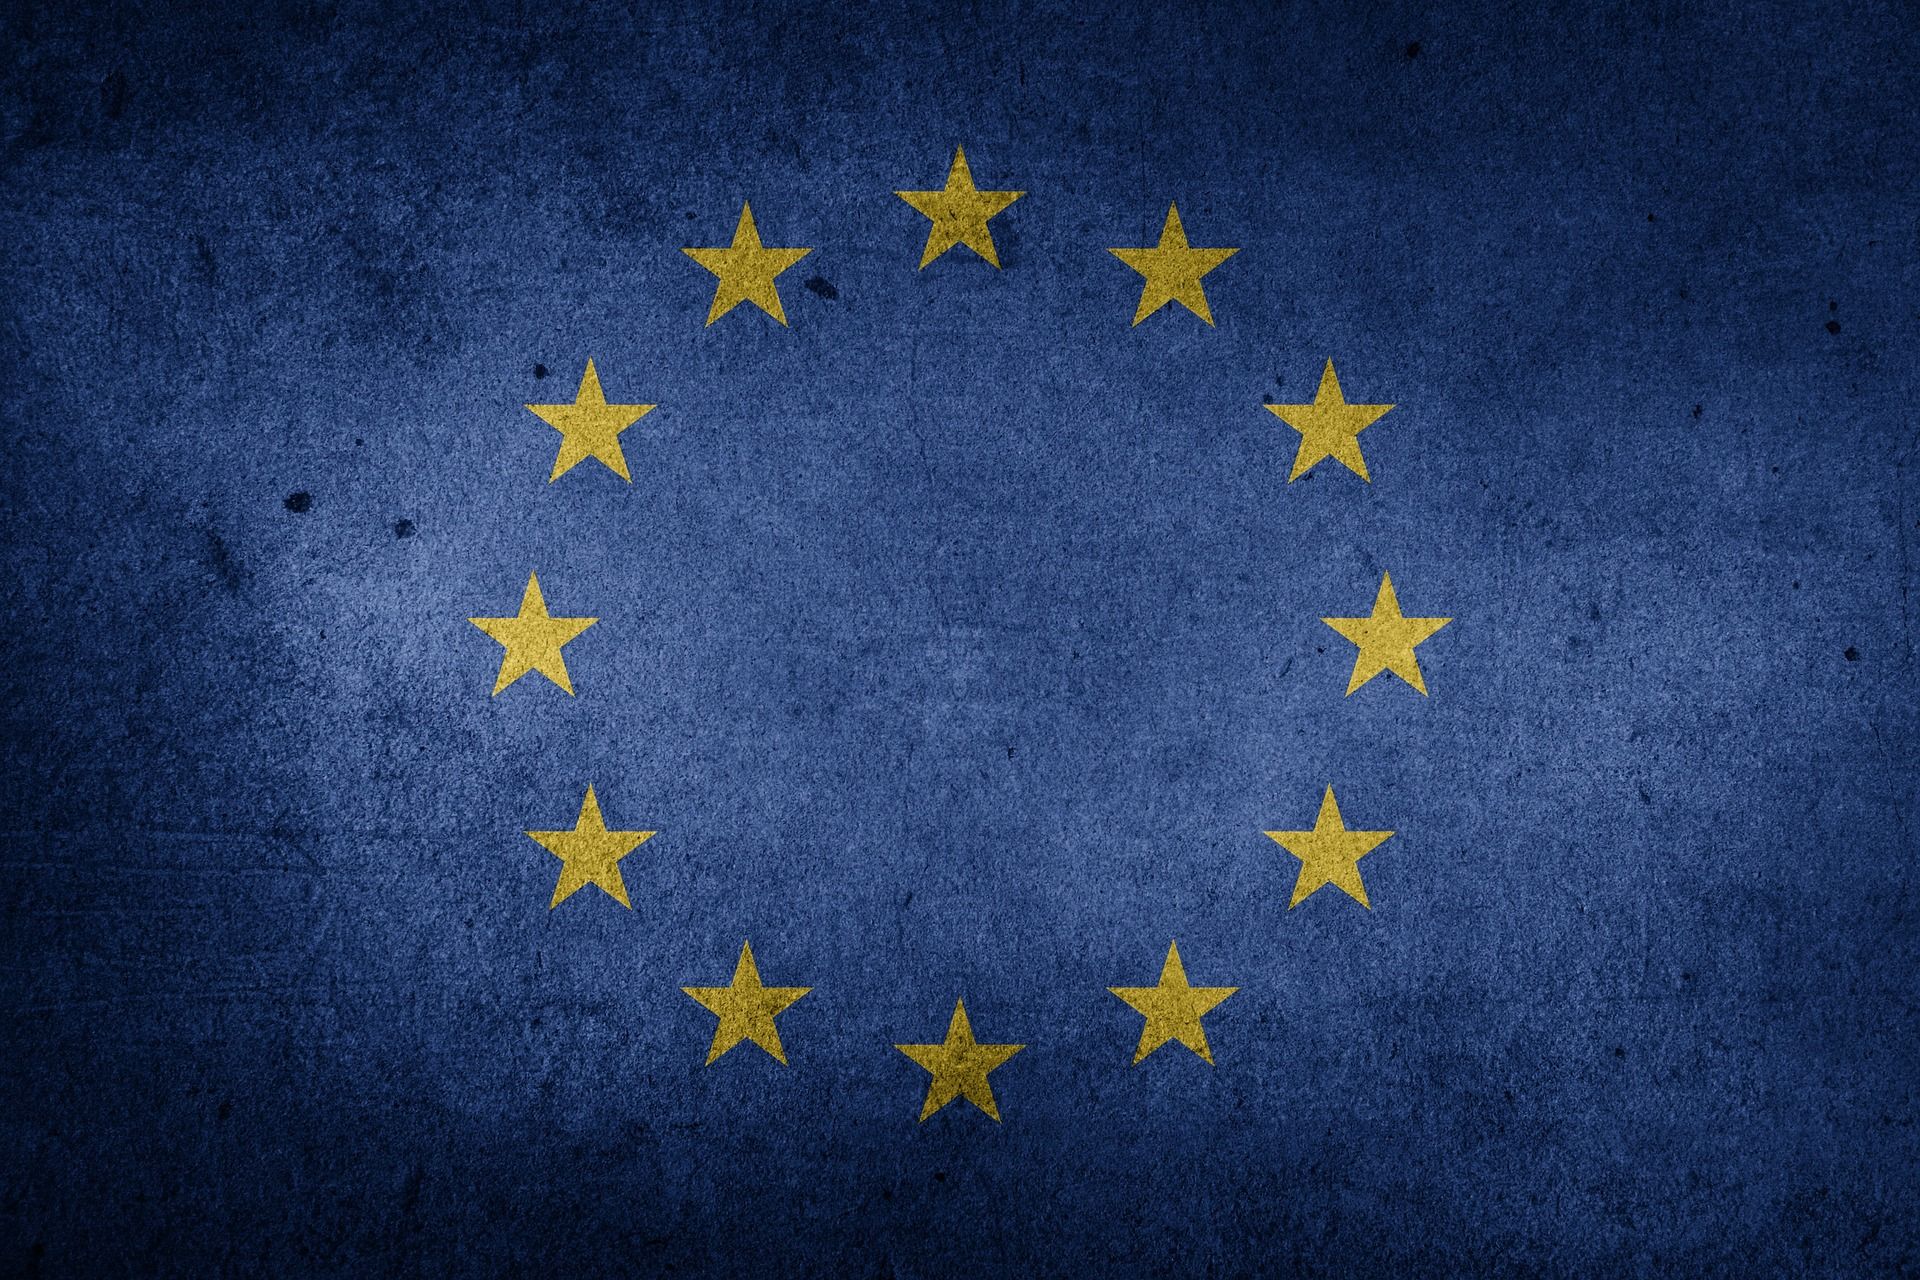 Evropská unie a kryptoměny